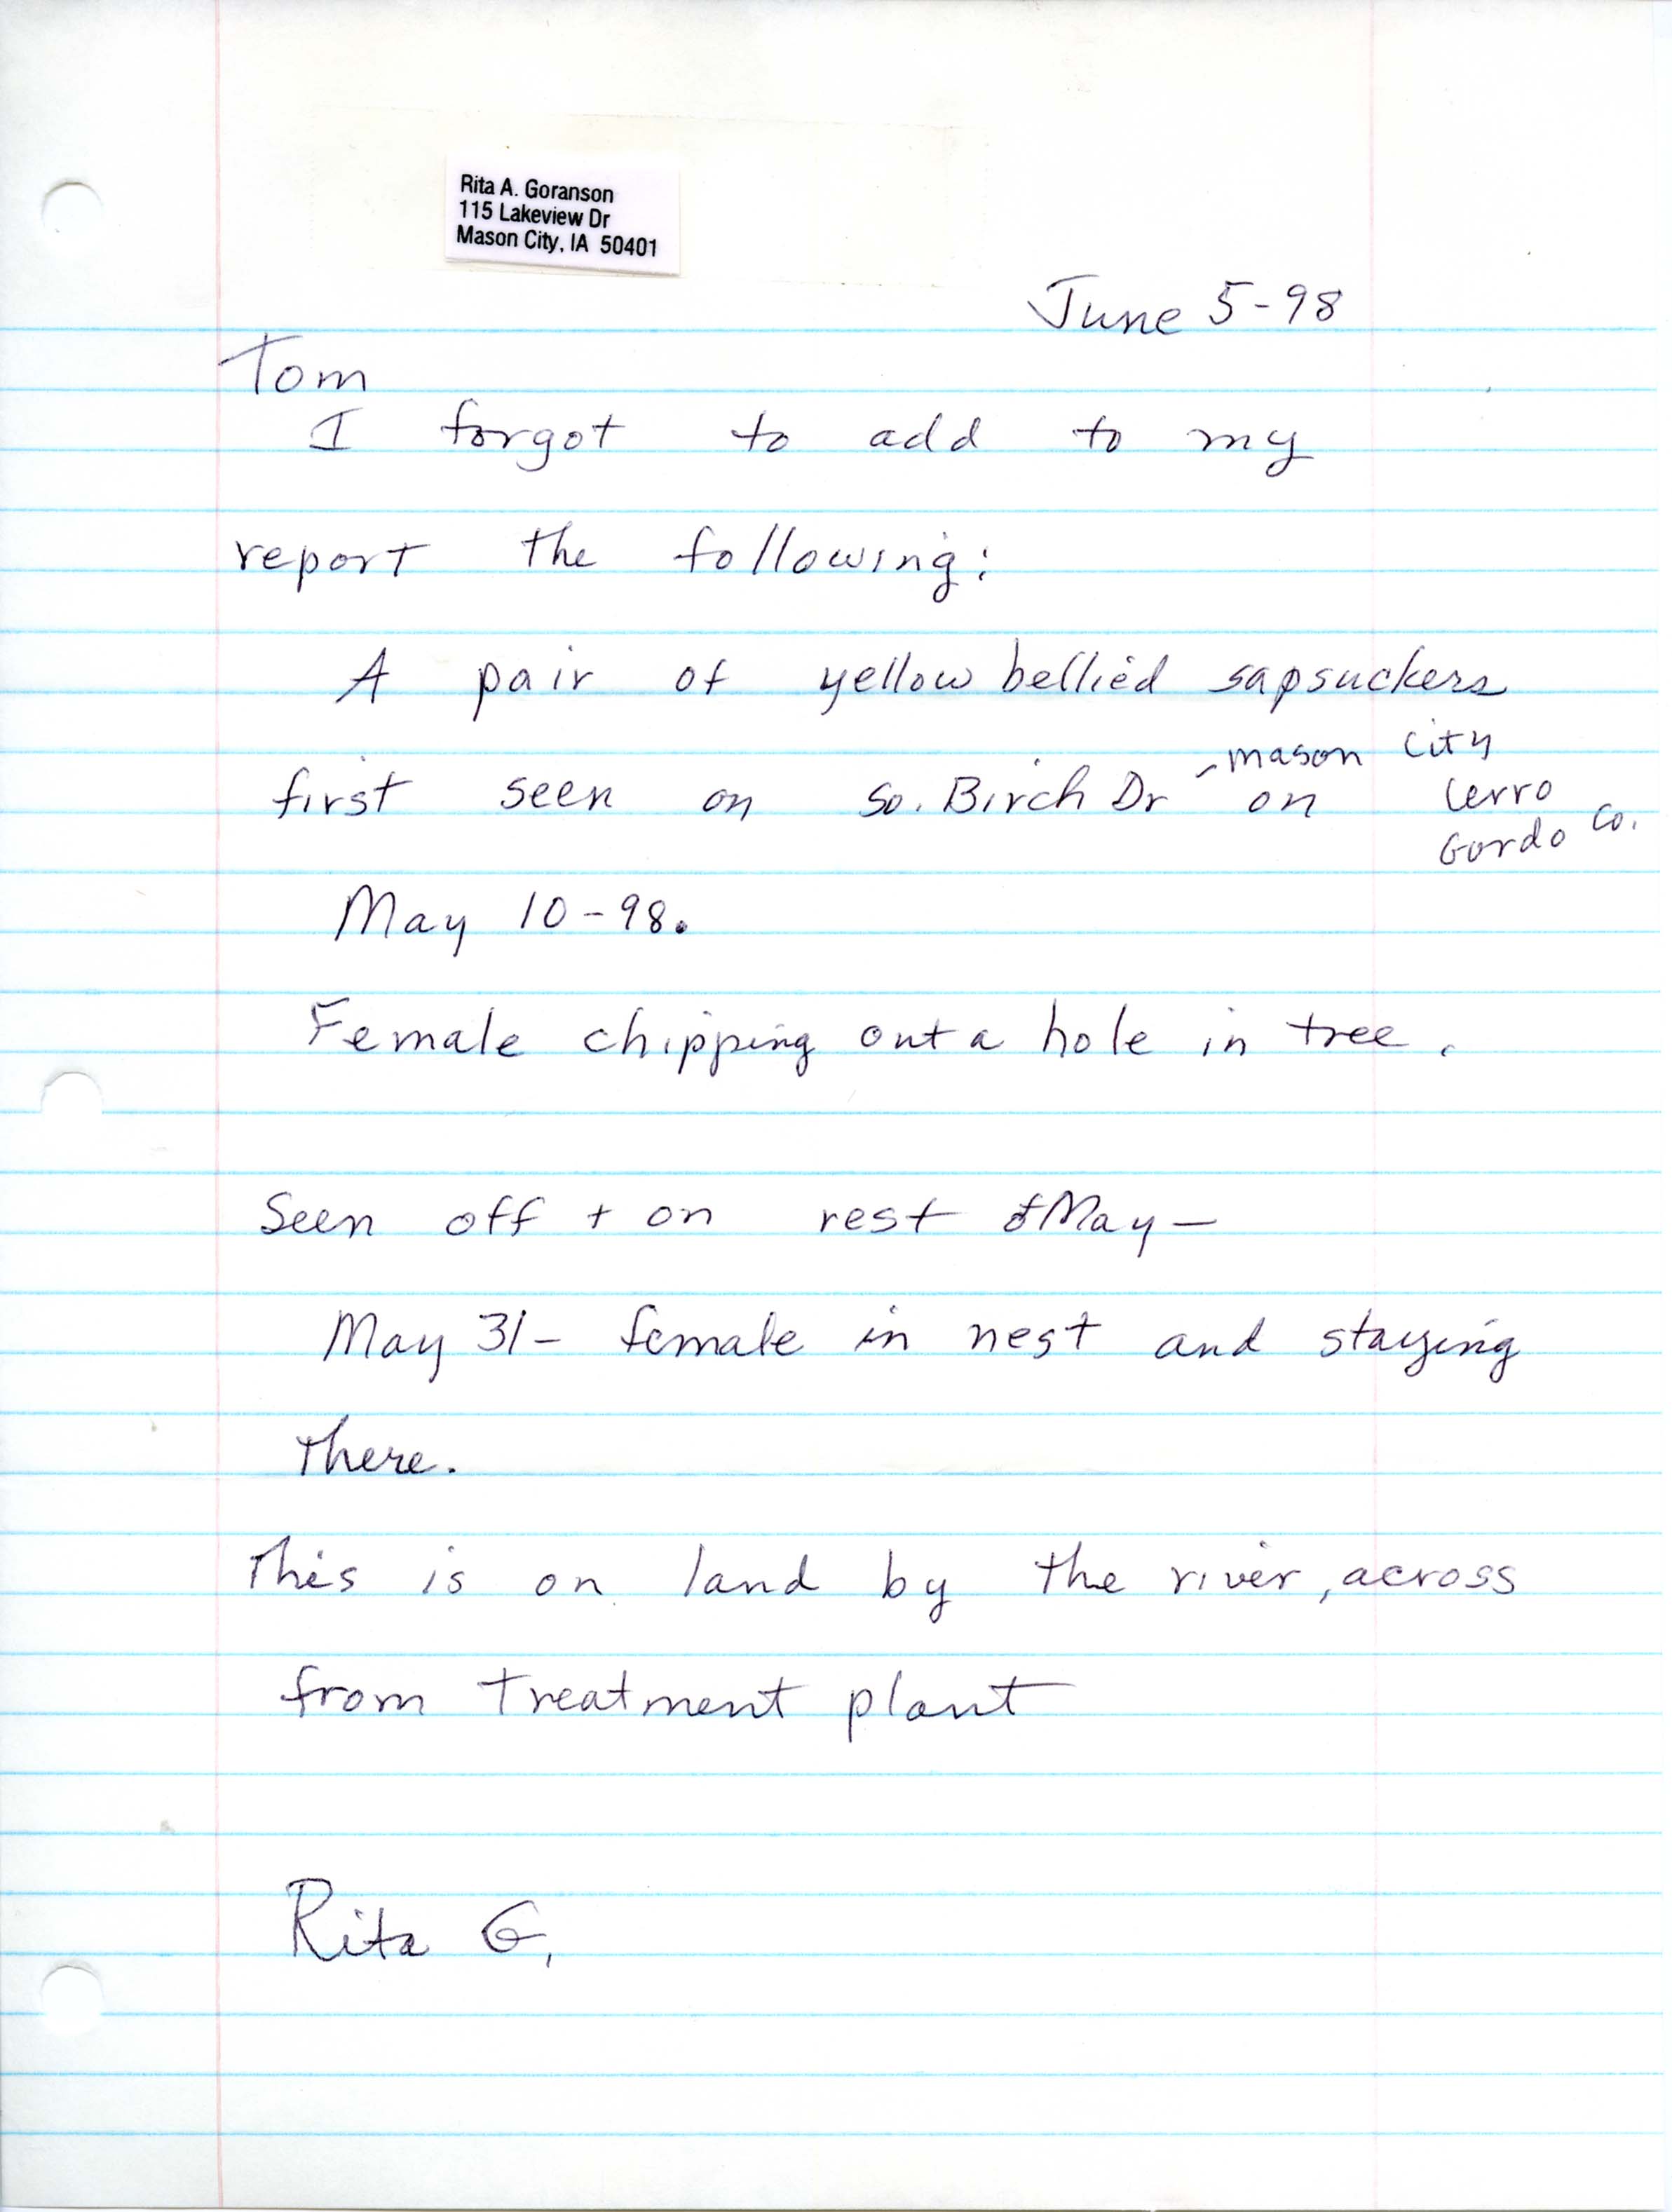 Rita Goranson letter to Thomas Kent regarding Yellow-bellied Sapsuckers, June 5, 1998